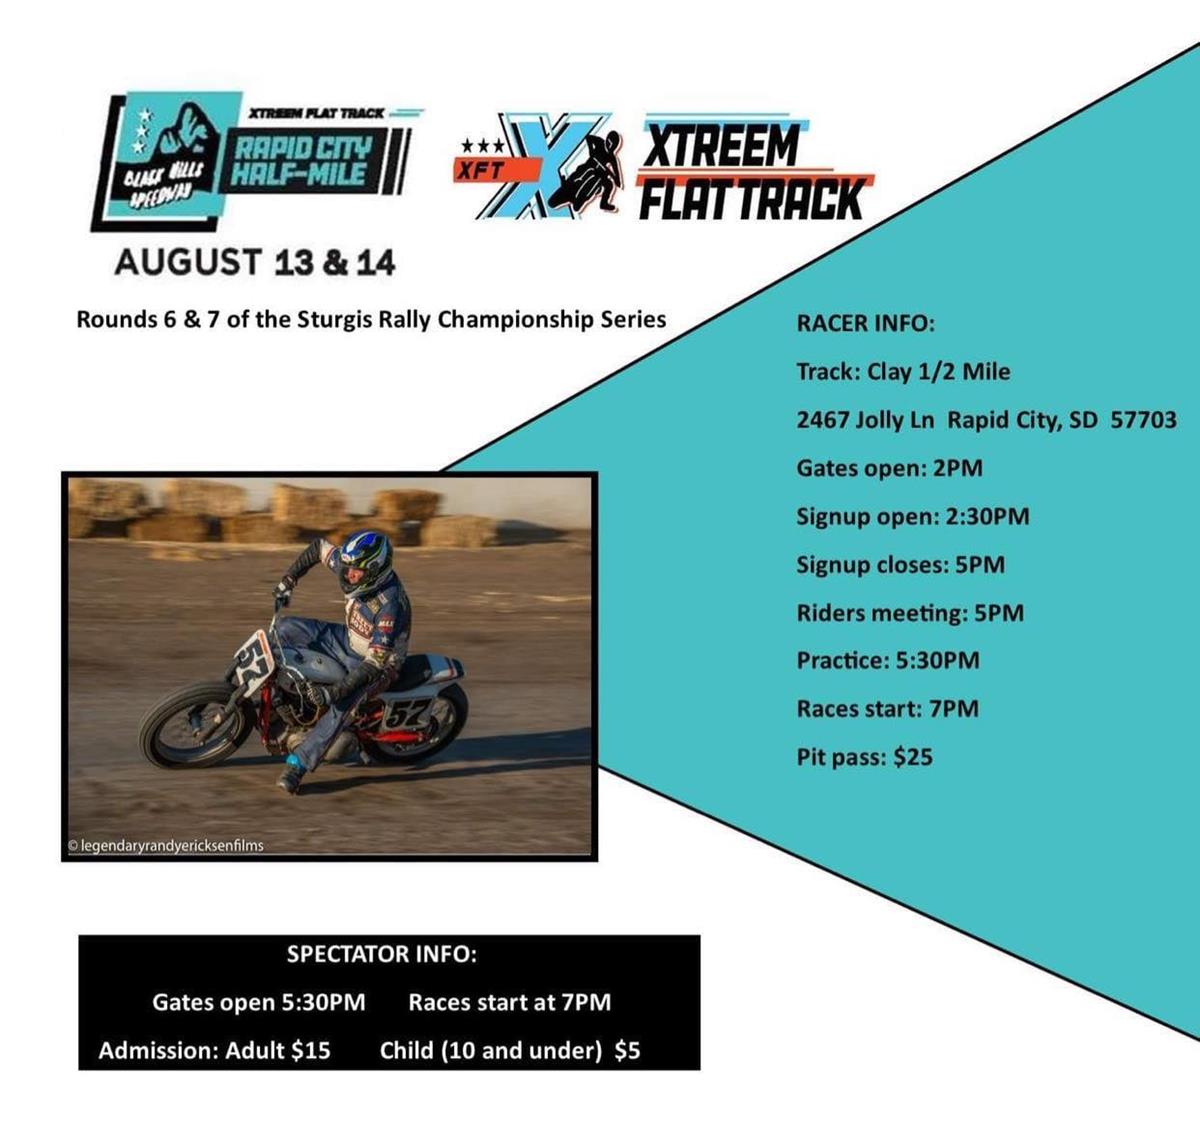 XTREEM Flat Track Aug 13-14